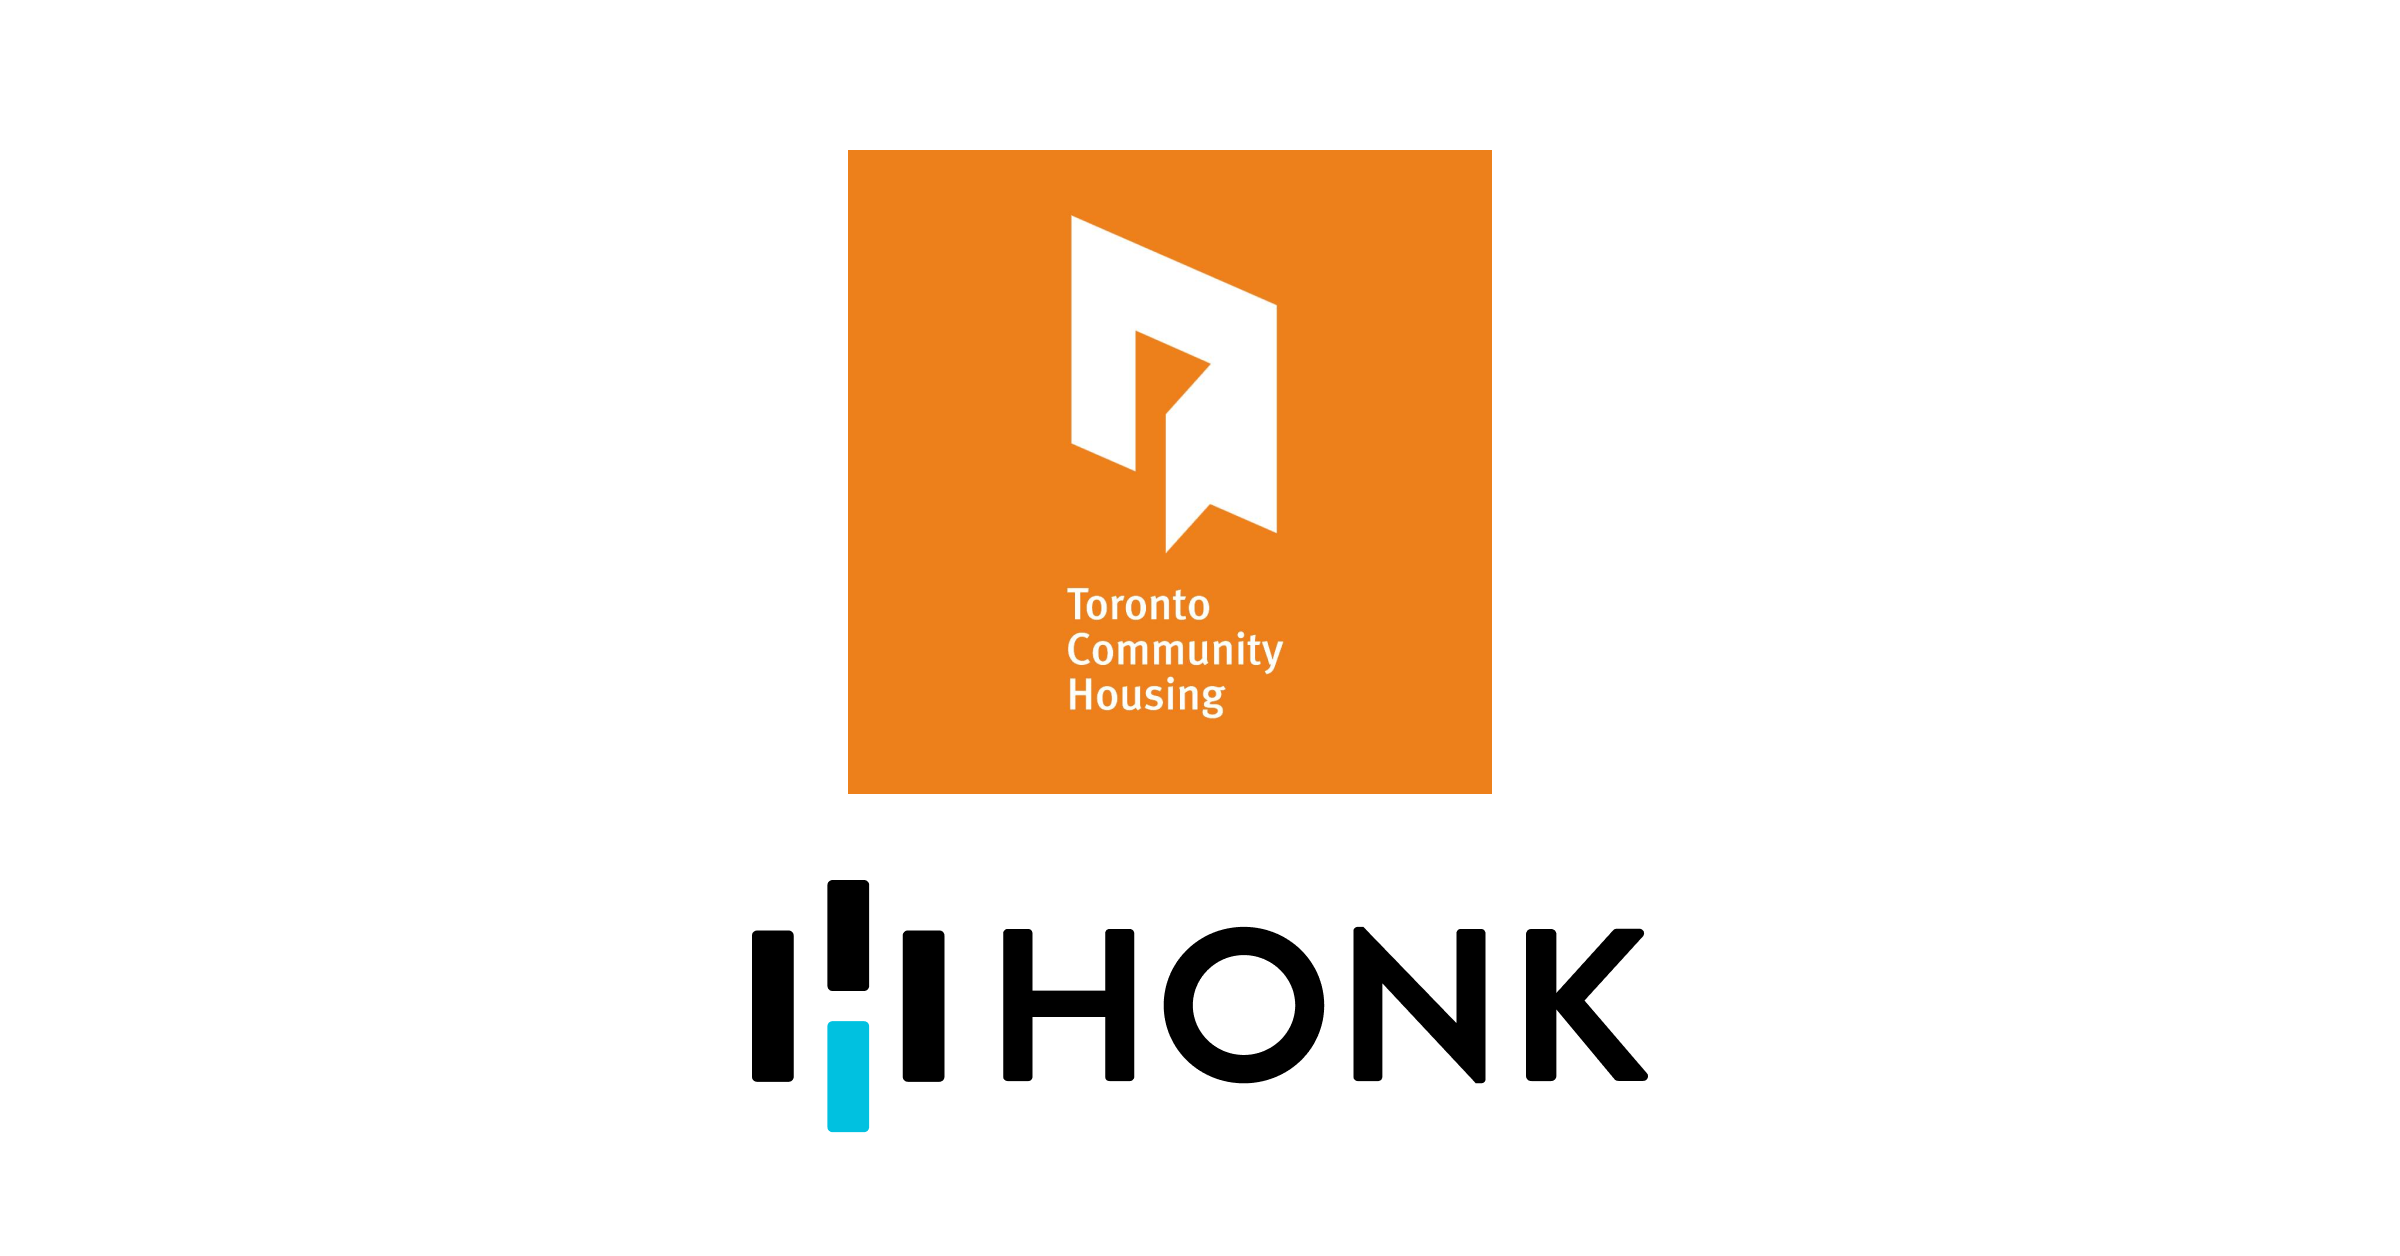 Toronto Community Housing and HONK